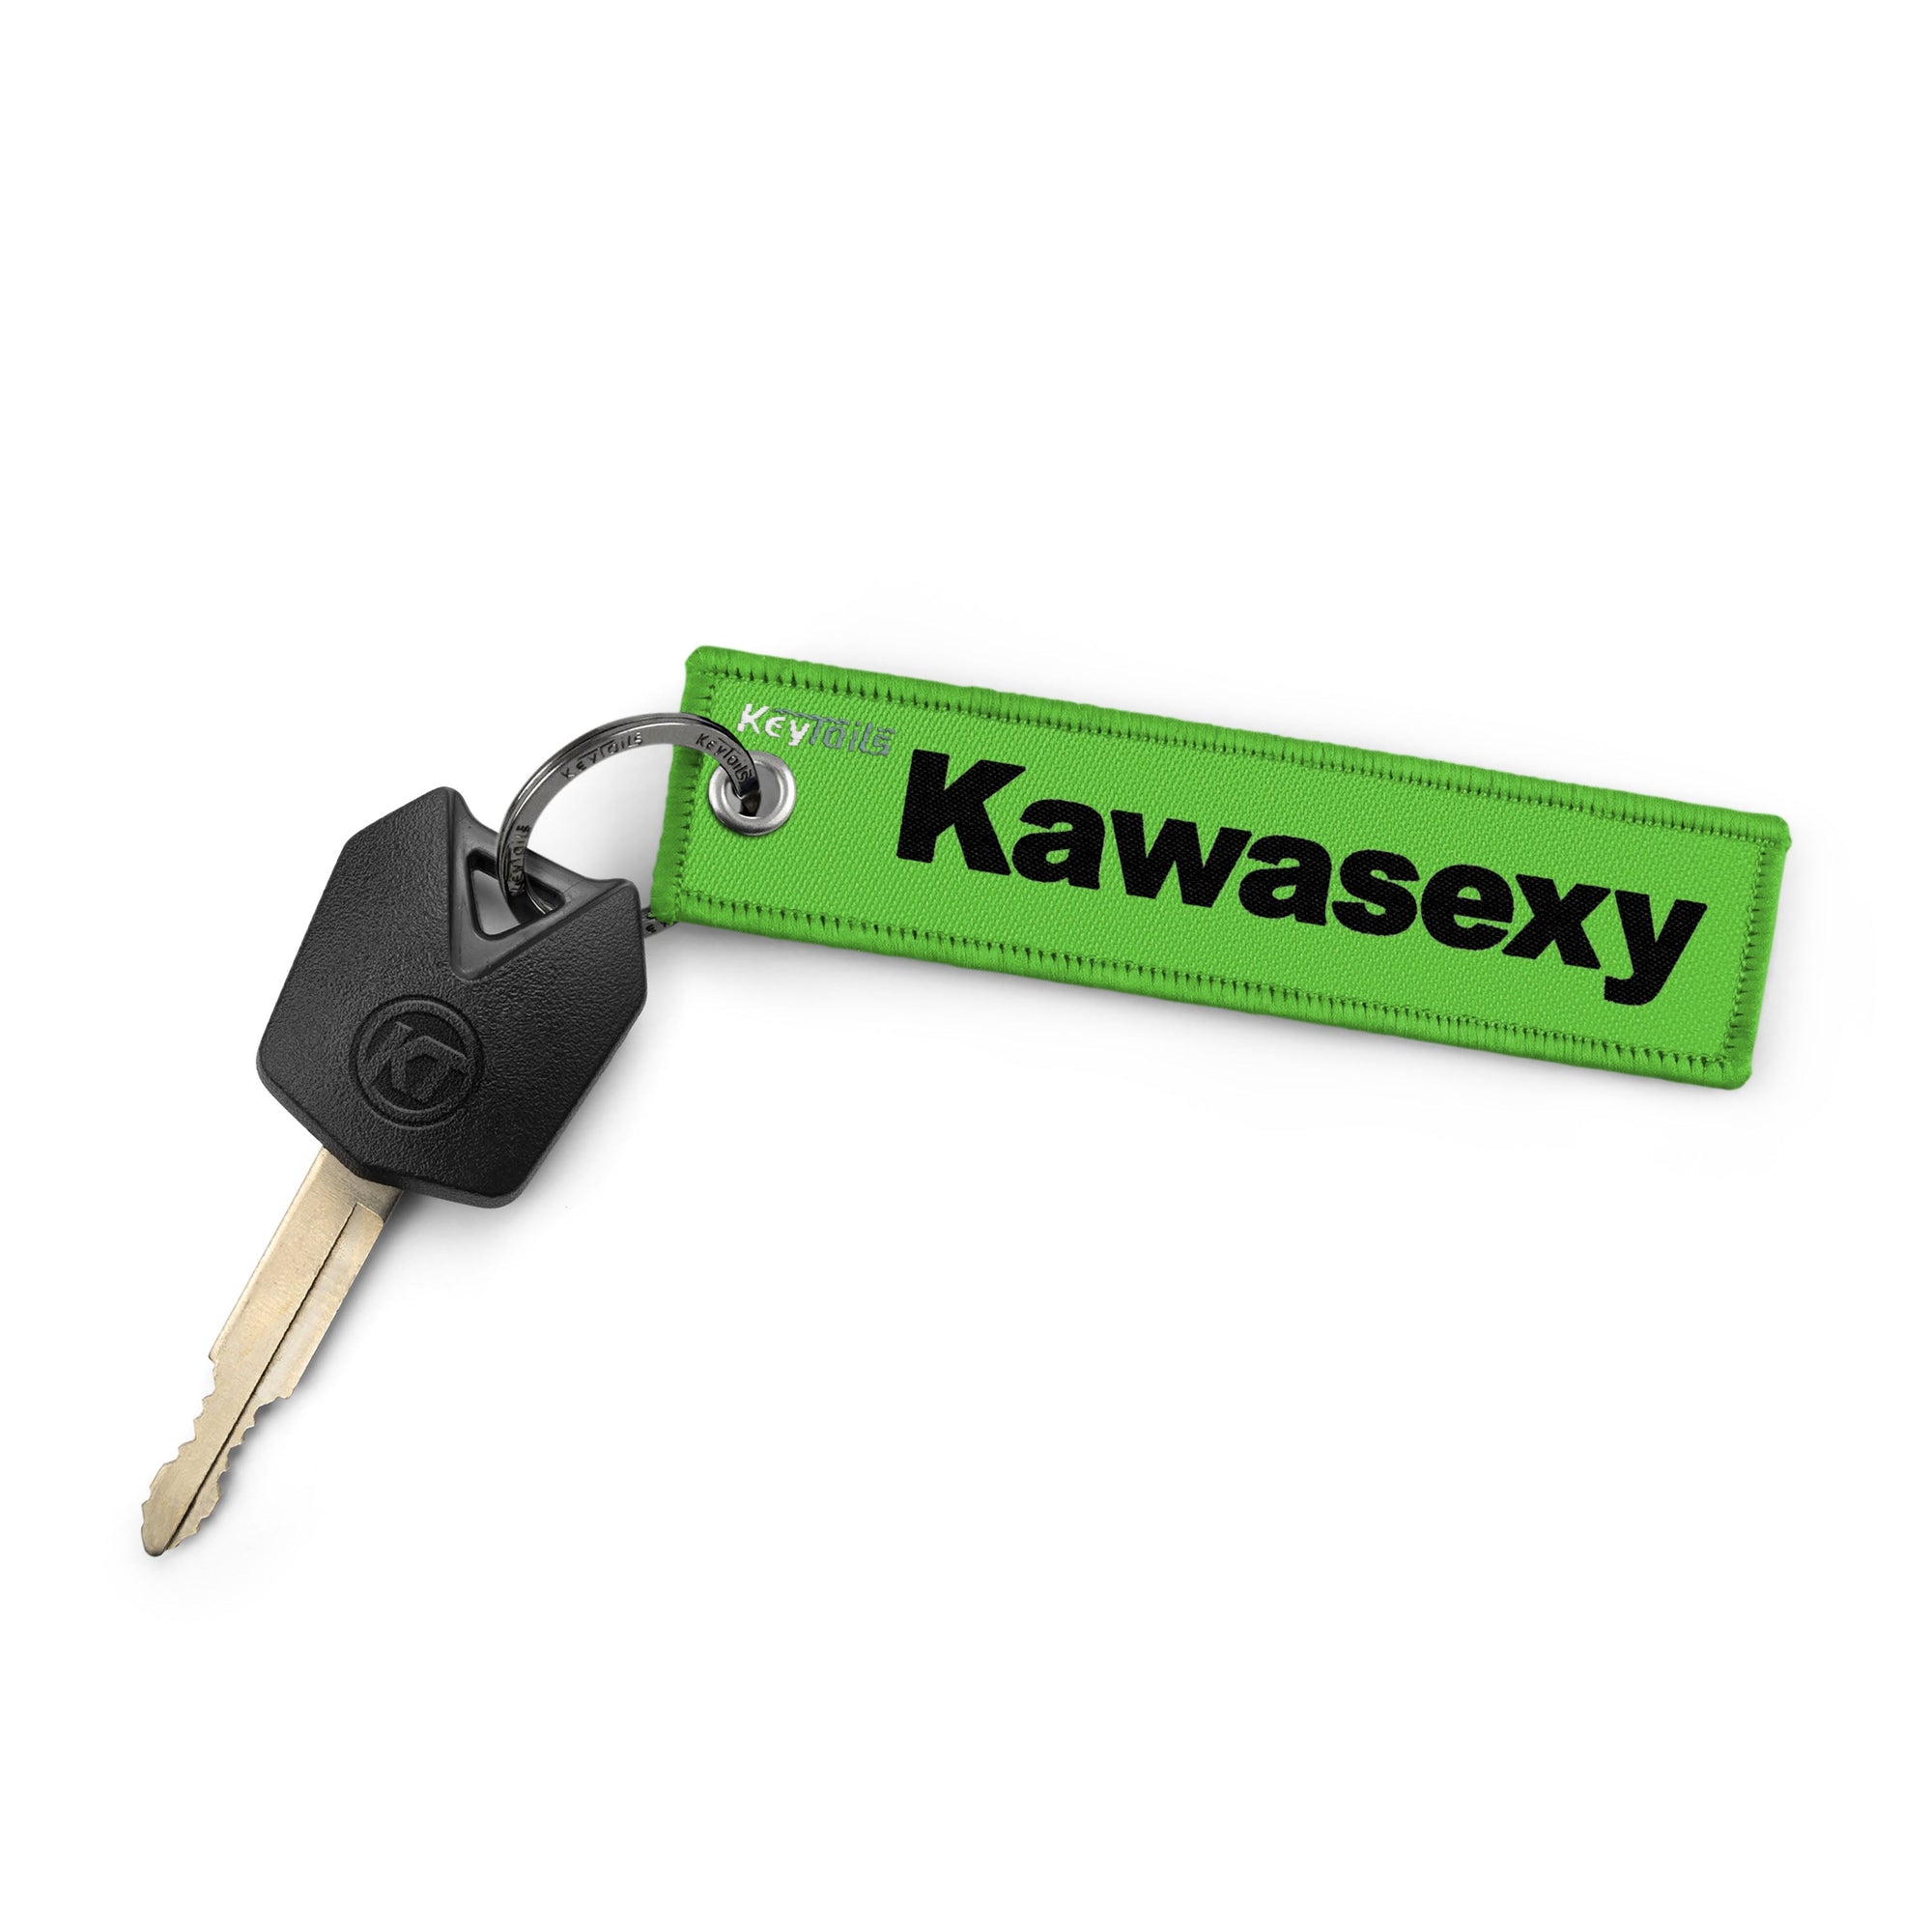 Kawasexy Keychain, Key Tag - Green